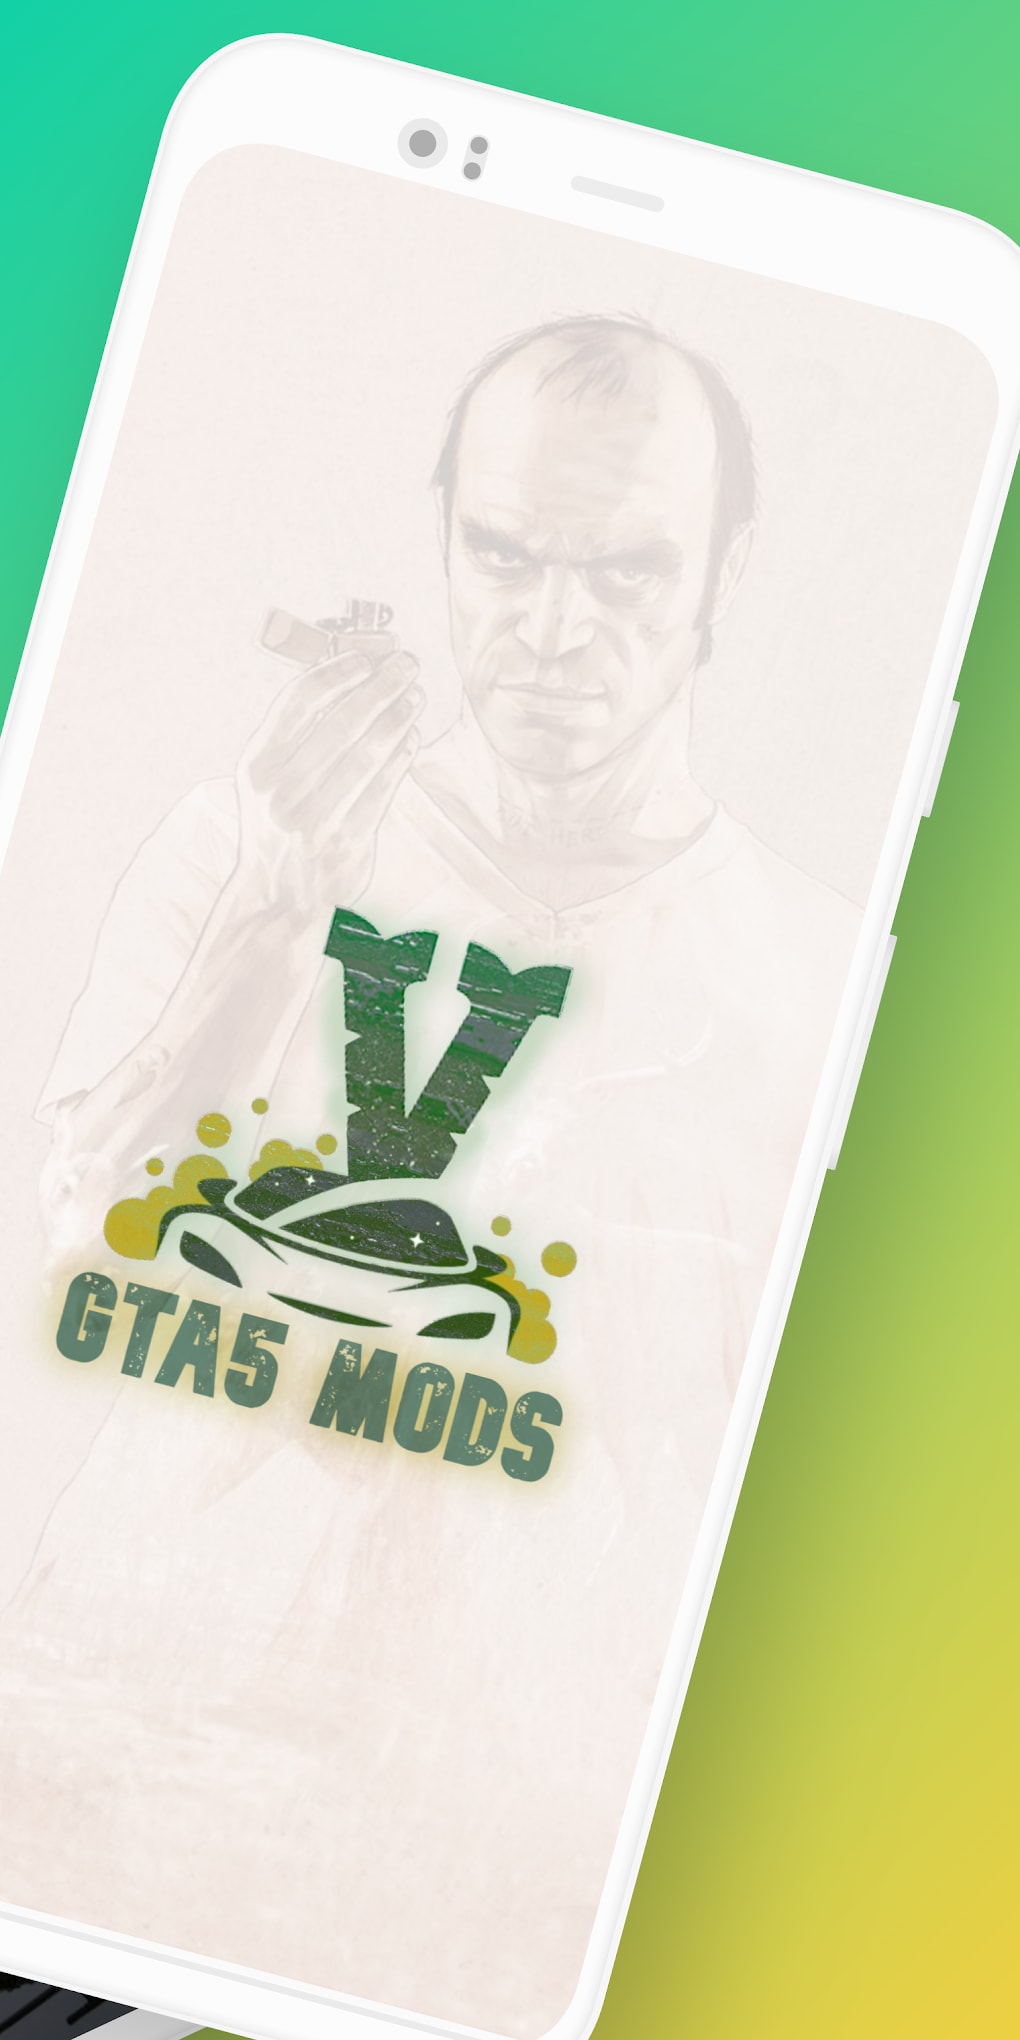 GTA 5 MODS - Apps on Google Play